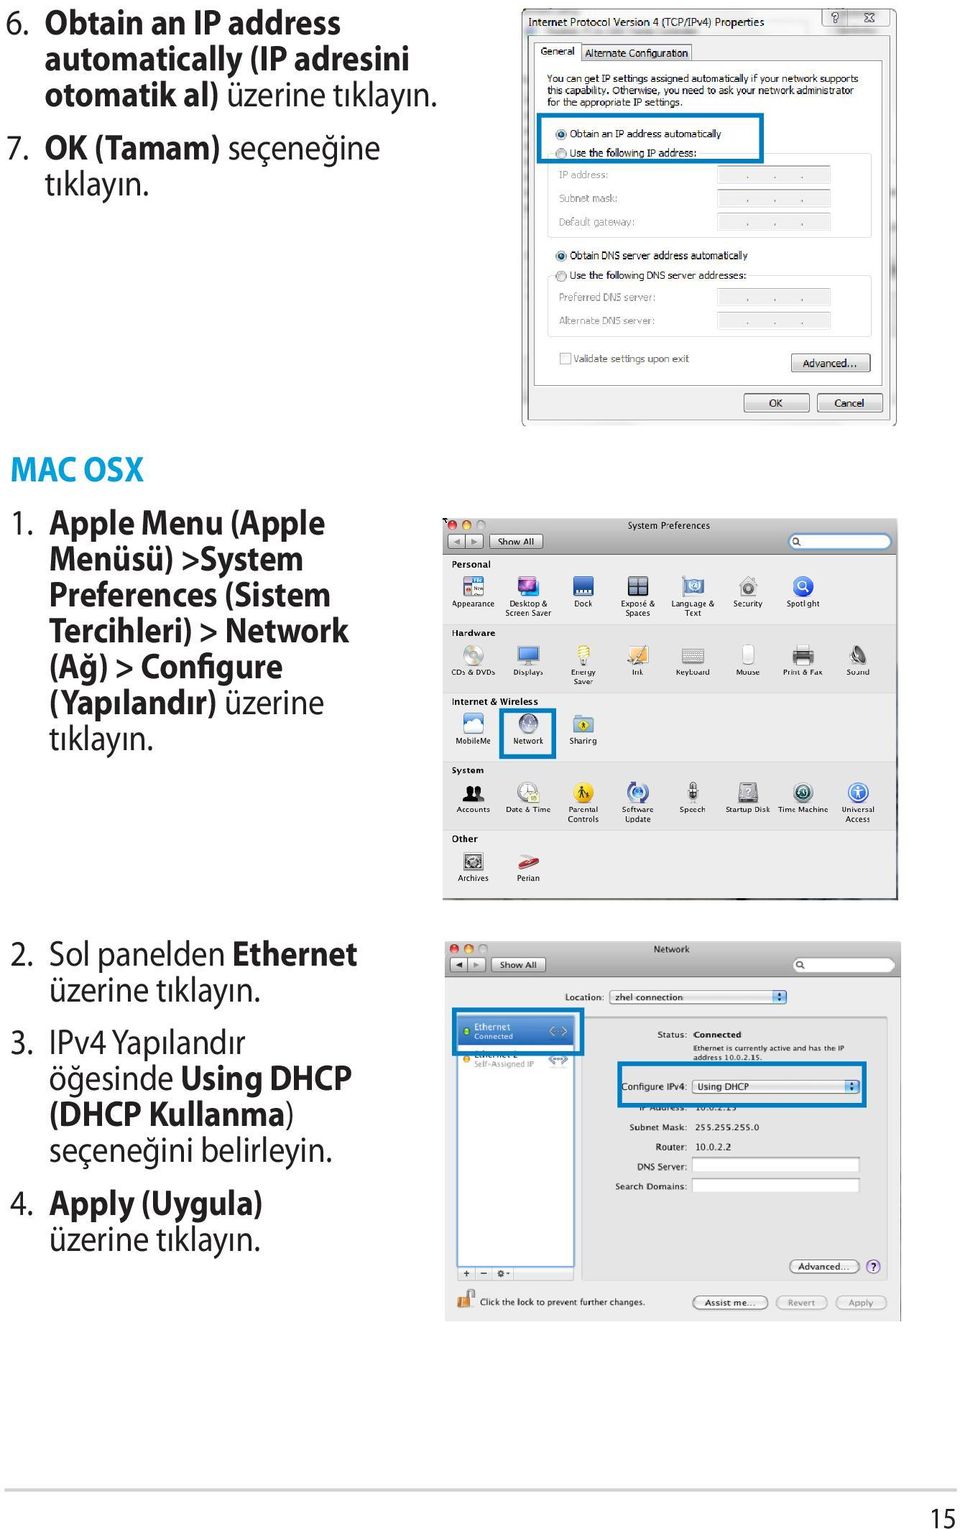 Apple Menu (Apple Menüsü) >System Preferences (Sistem Tercihleri) > Network (Ağ) > Configure